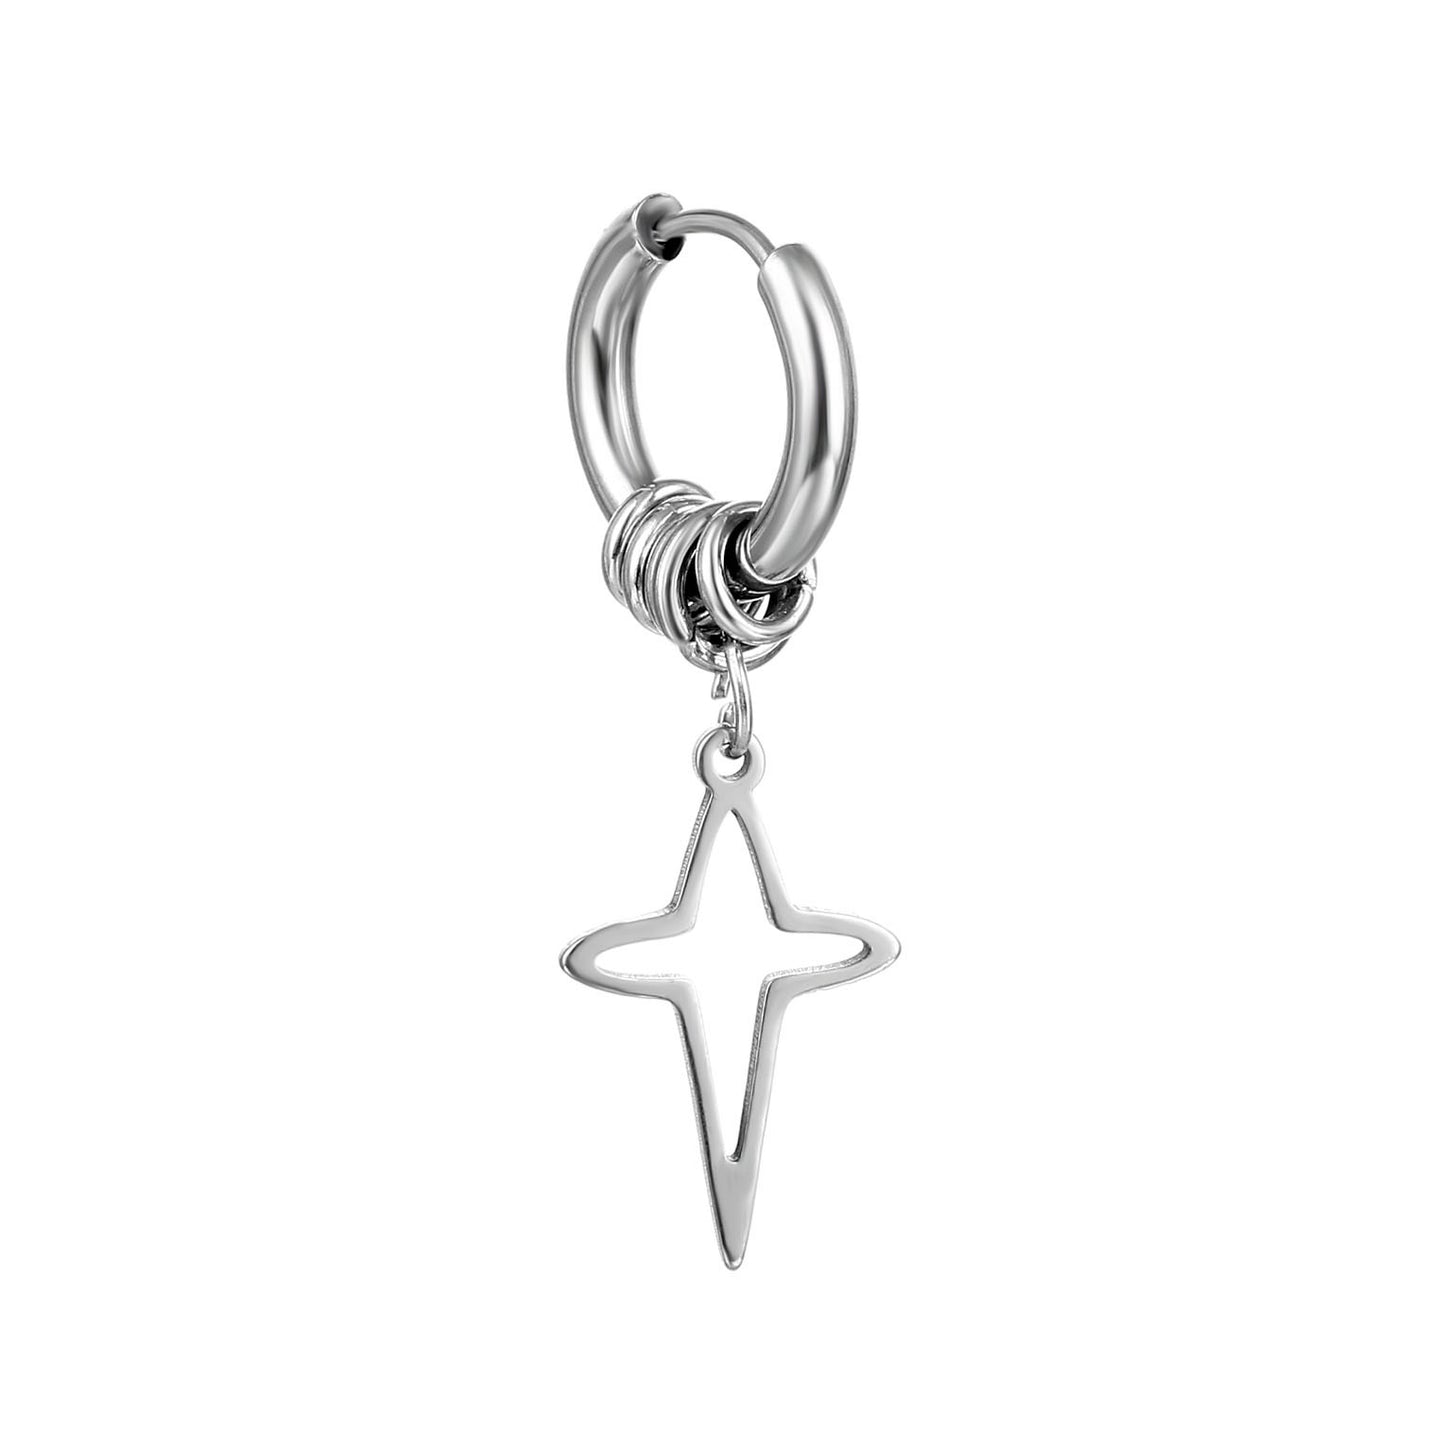 Stainless Steel Titanium Steel Earrings Four Eight-pointed Stars Maple Leaf Pendant Ear Hoop Jewelry